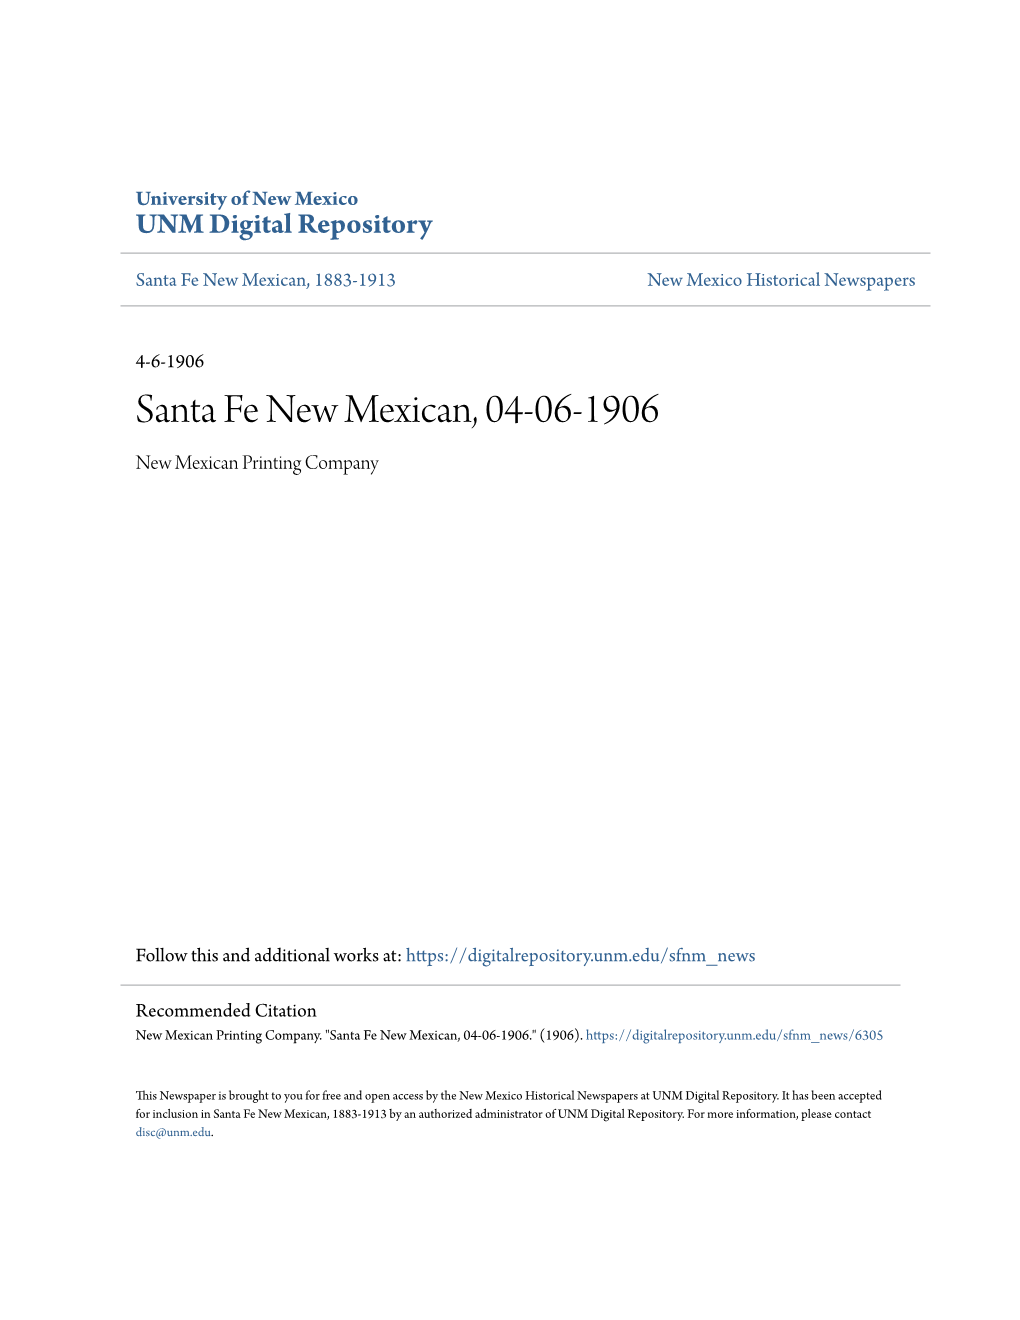 Santa Fe New Mexican, 04-06-1906 New Mexican Printing Company